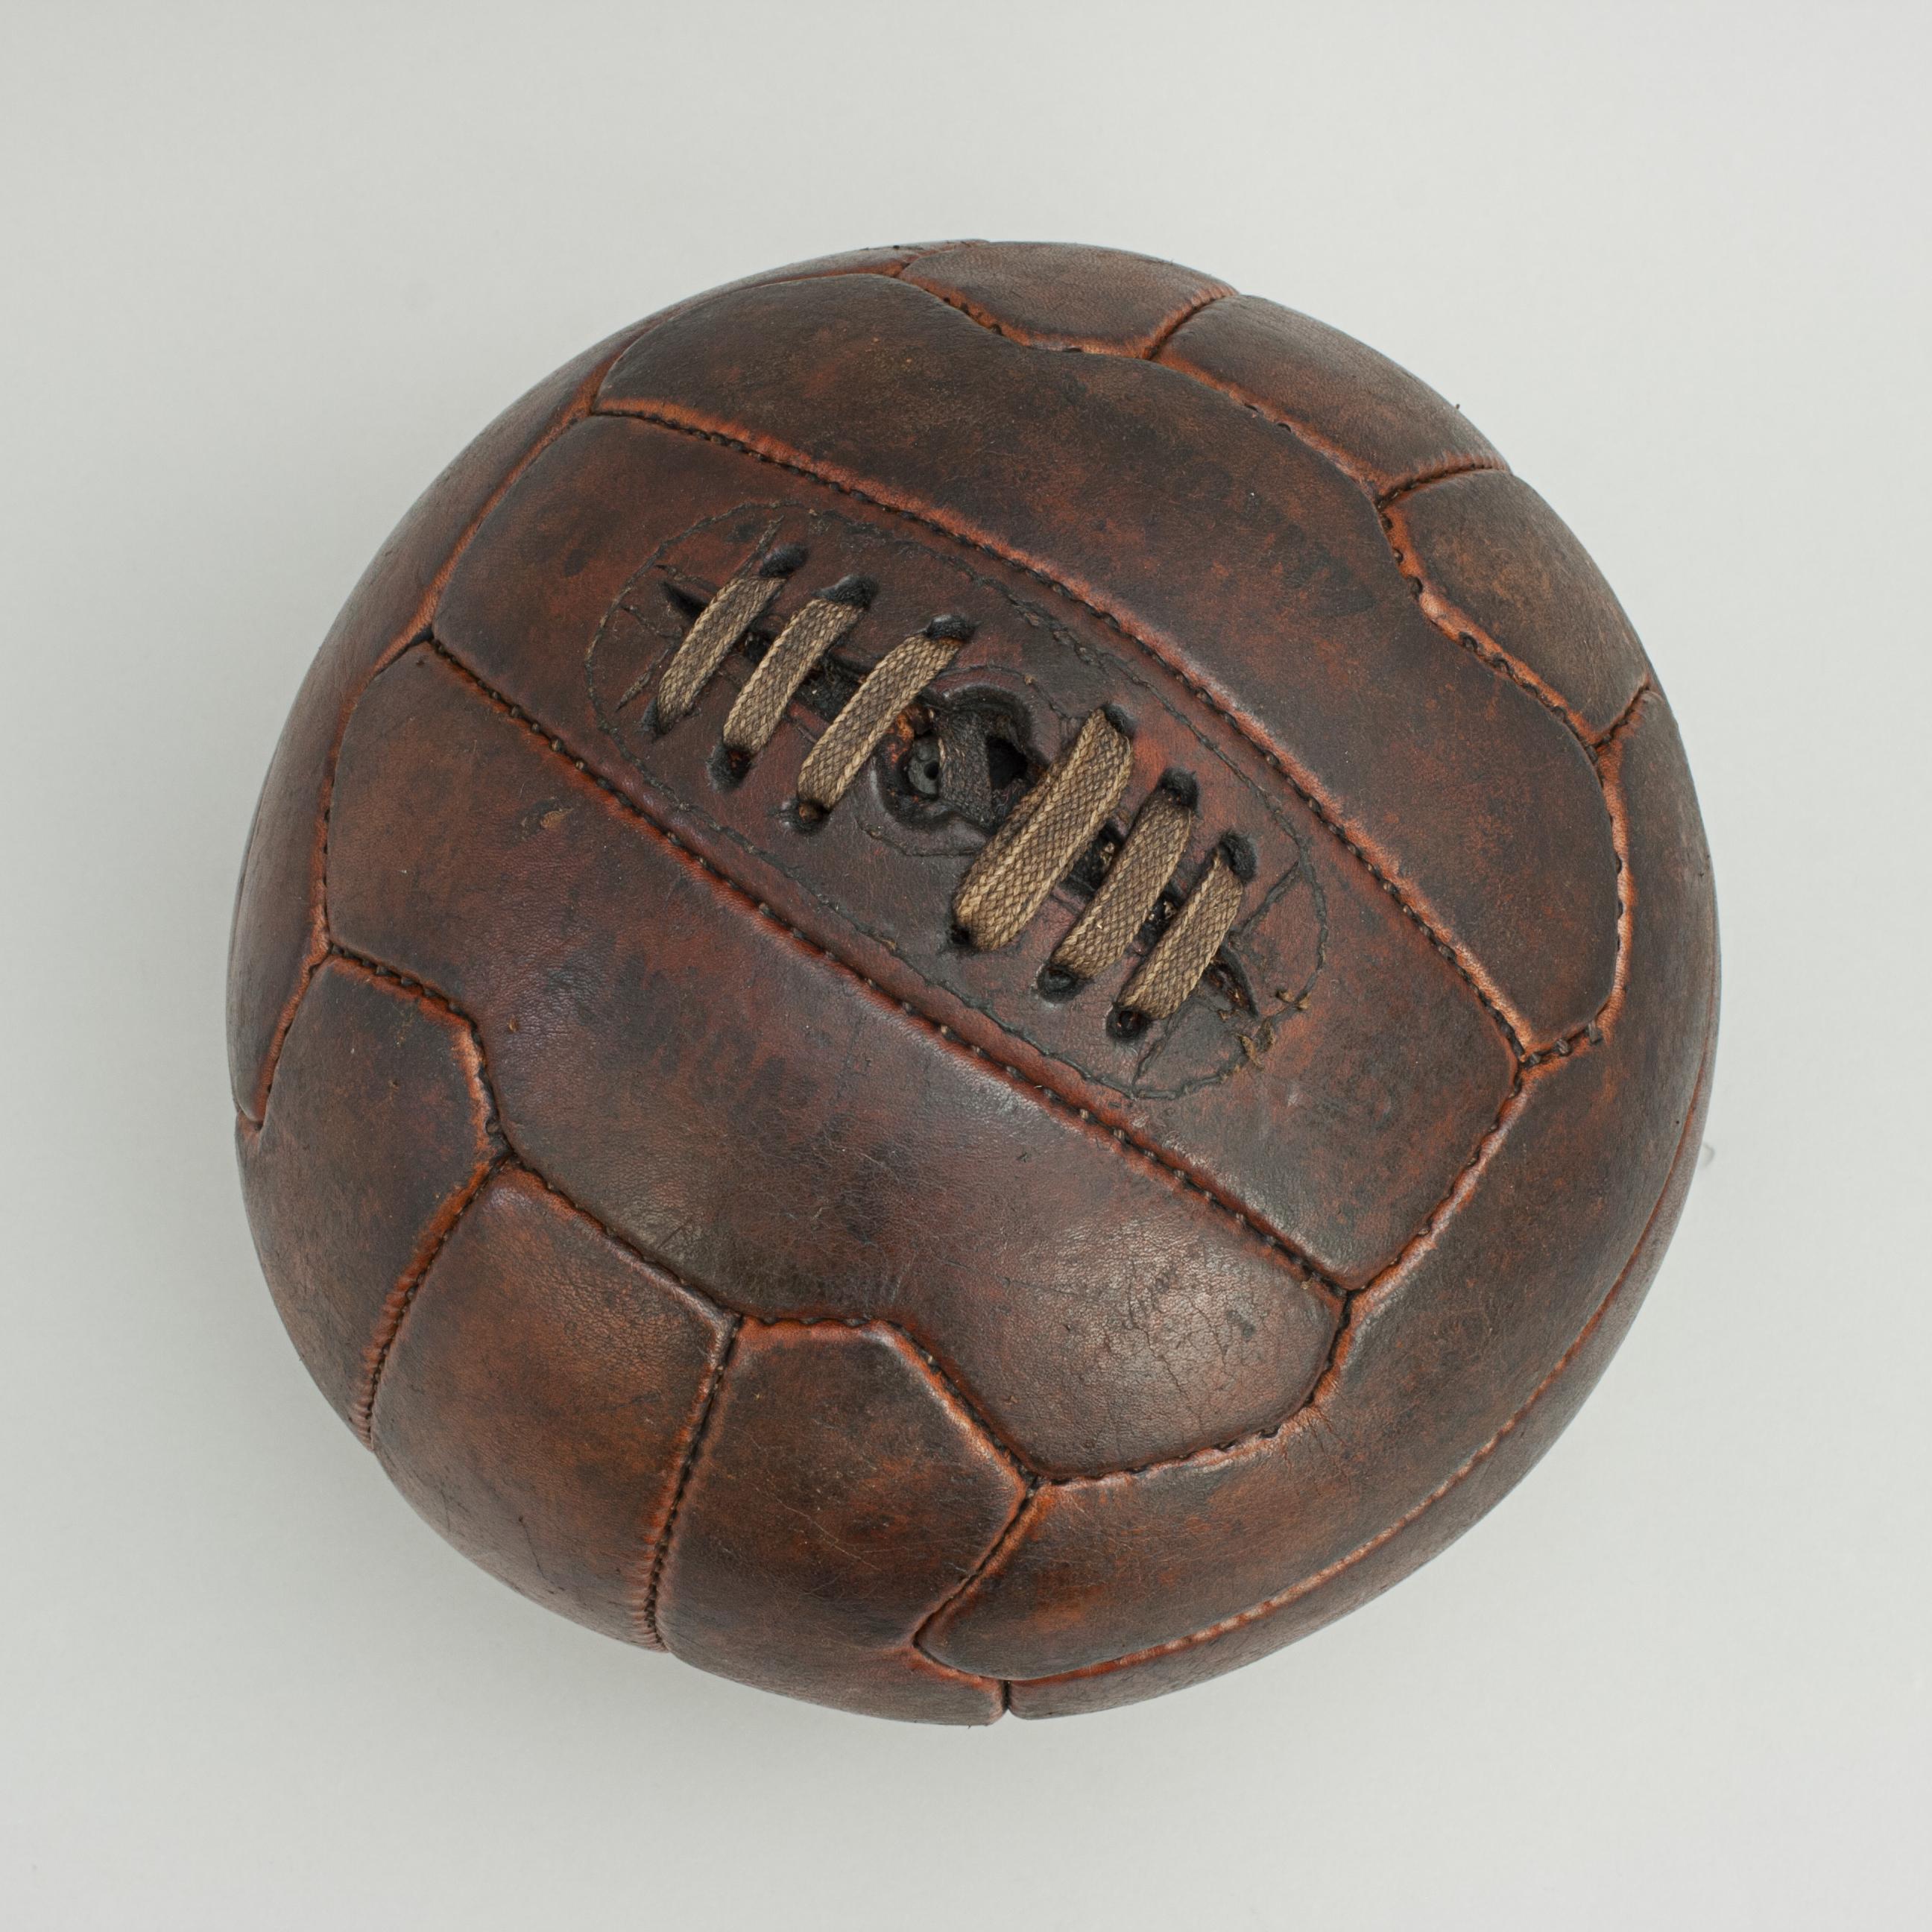 1950s Leather Vintage Football Zig-Zag Ariel Football Soccer Ball 2